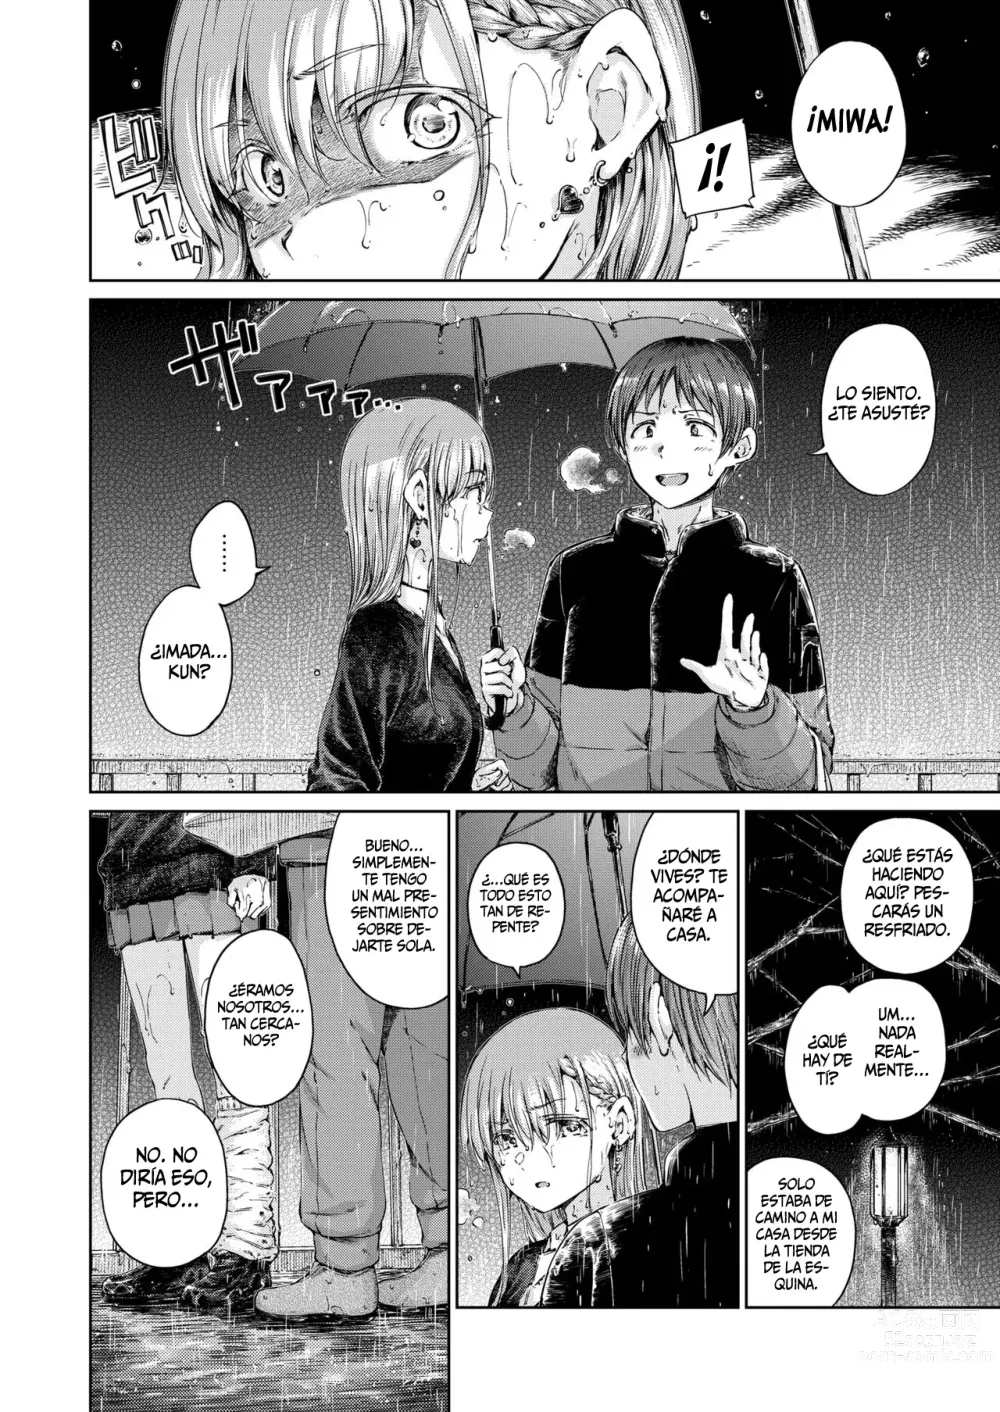 Page 2 of manga Prepayment